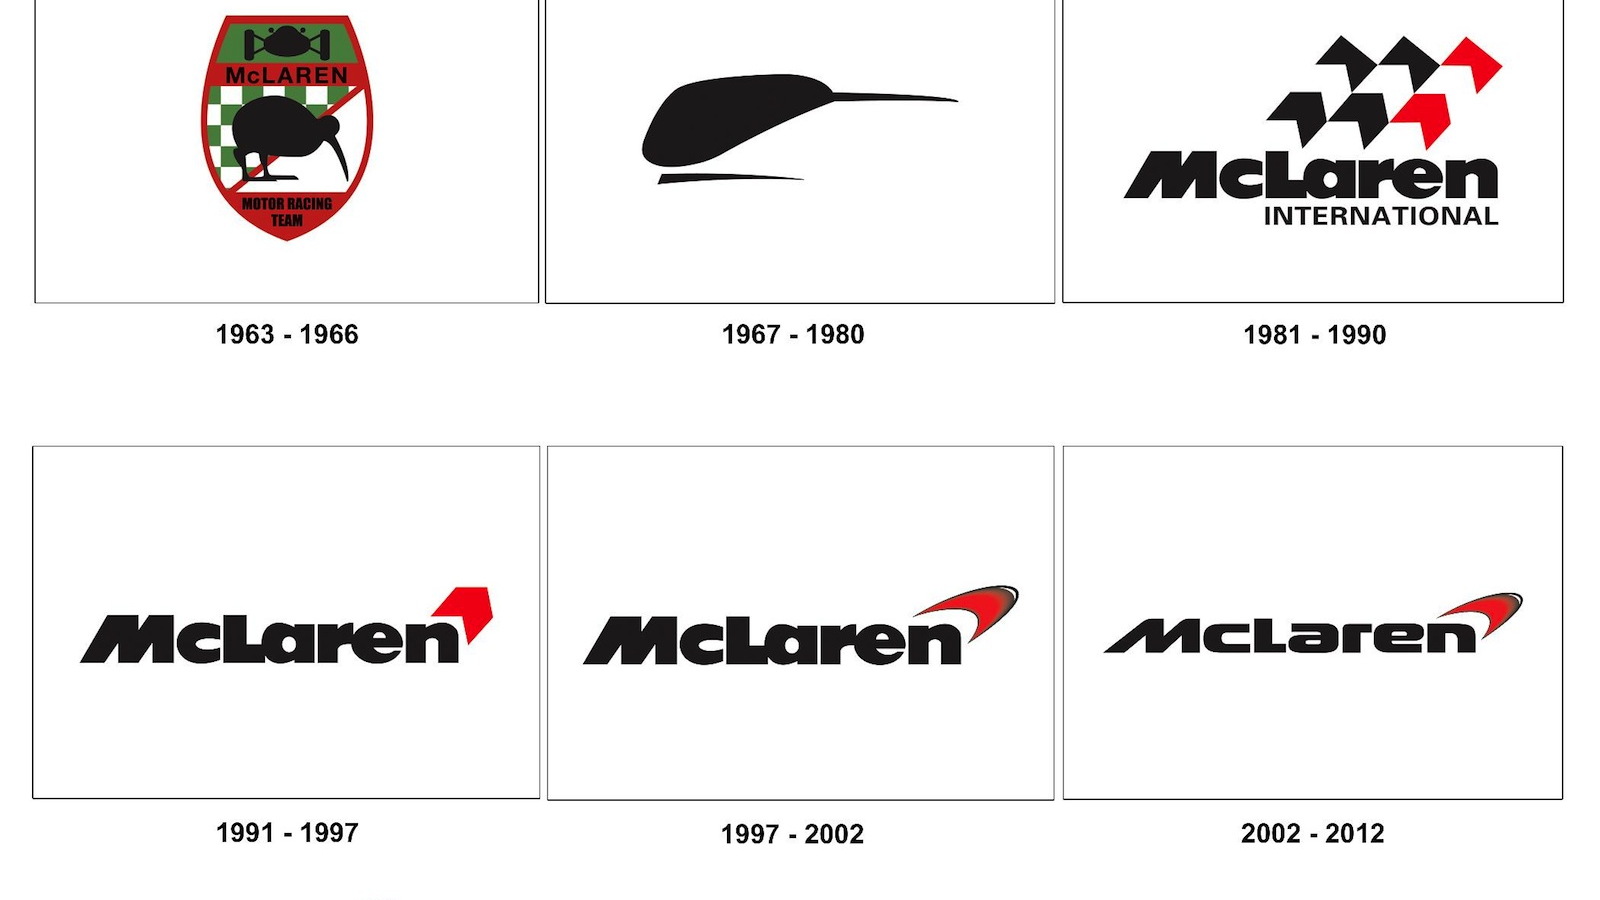 McLaren celebrates 50 years in 2013 - image: McLaren